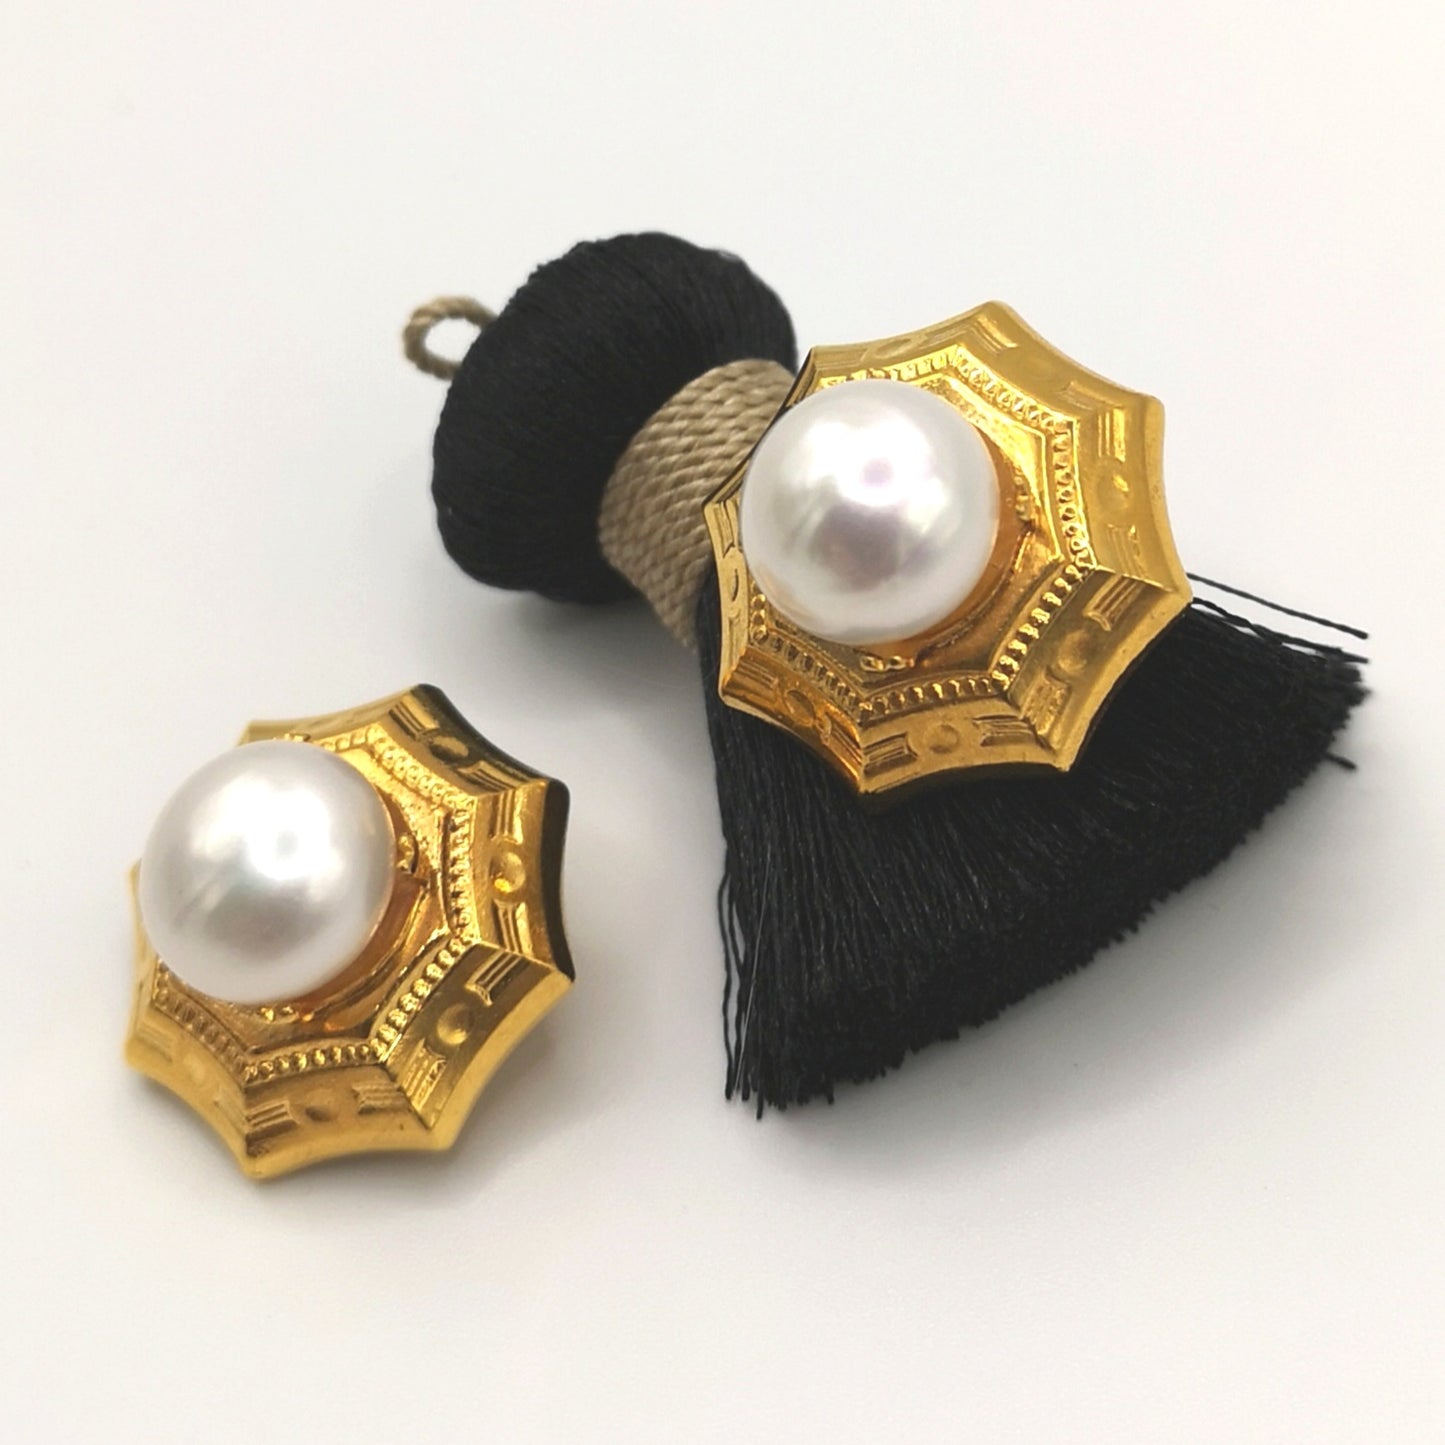 Vintage 50' Chanel style earrings